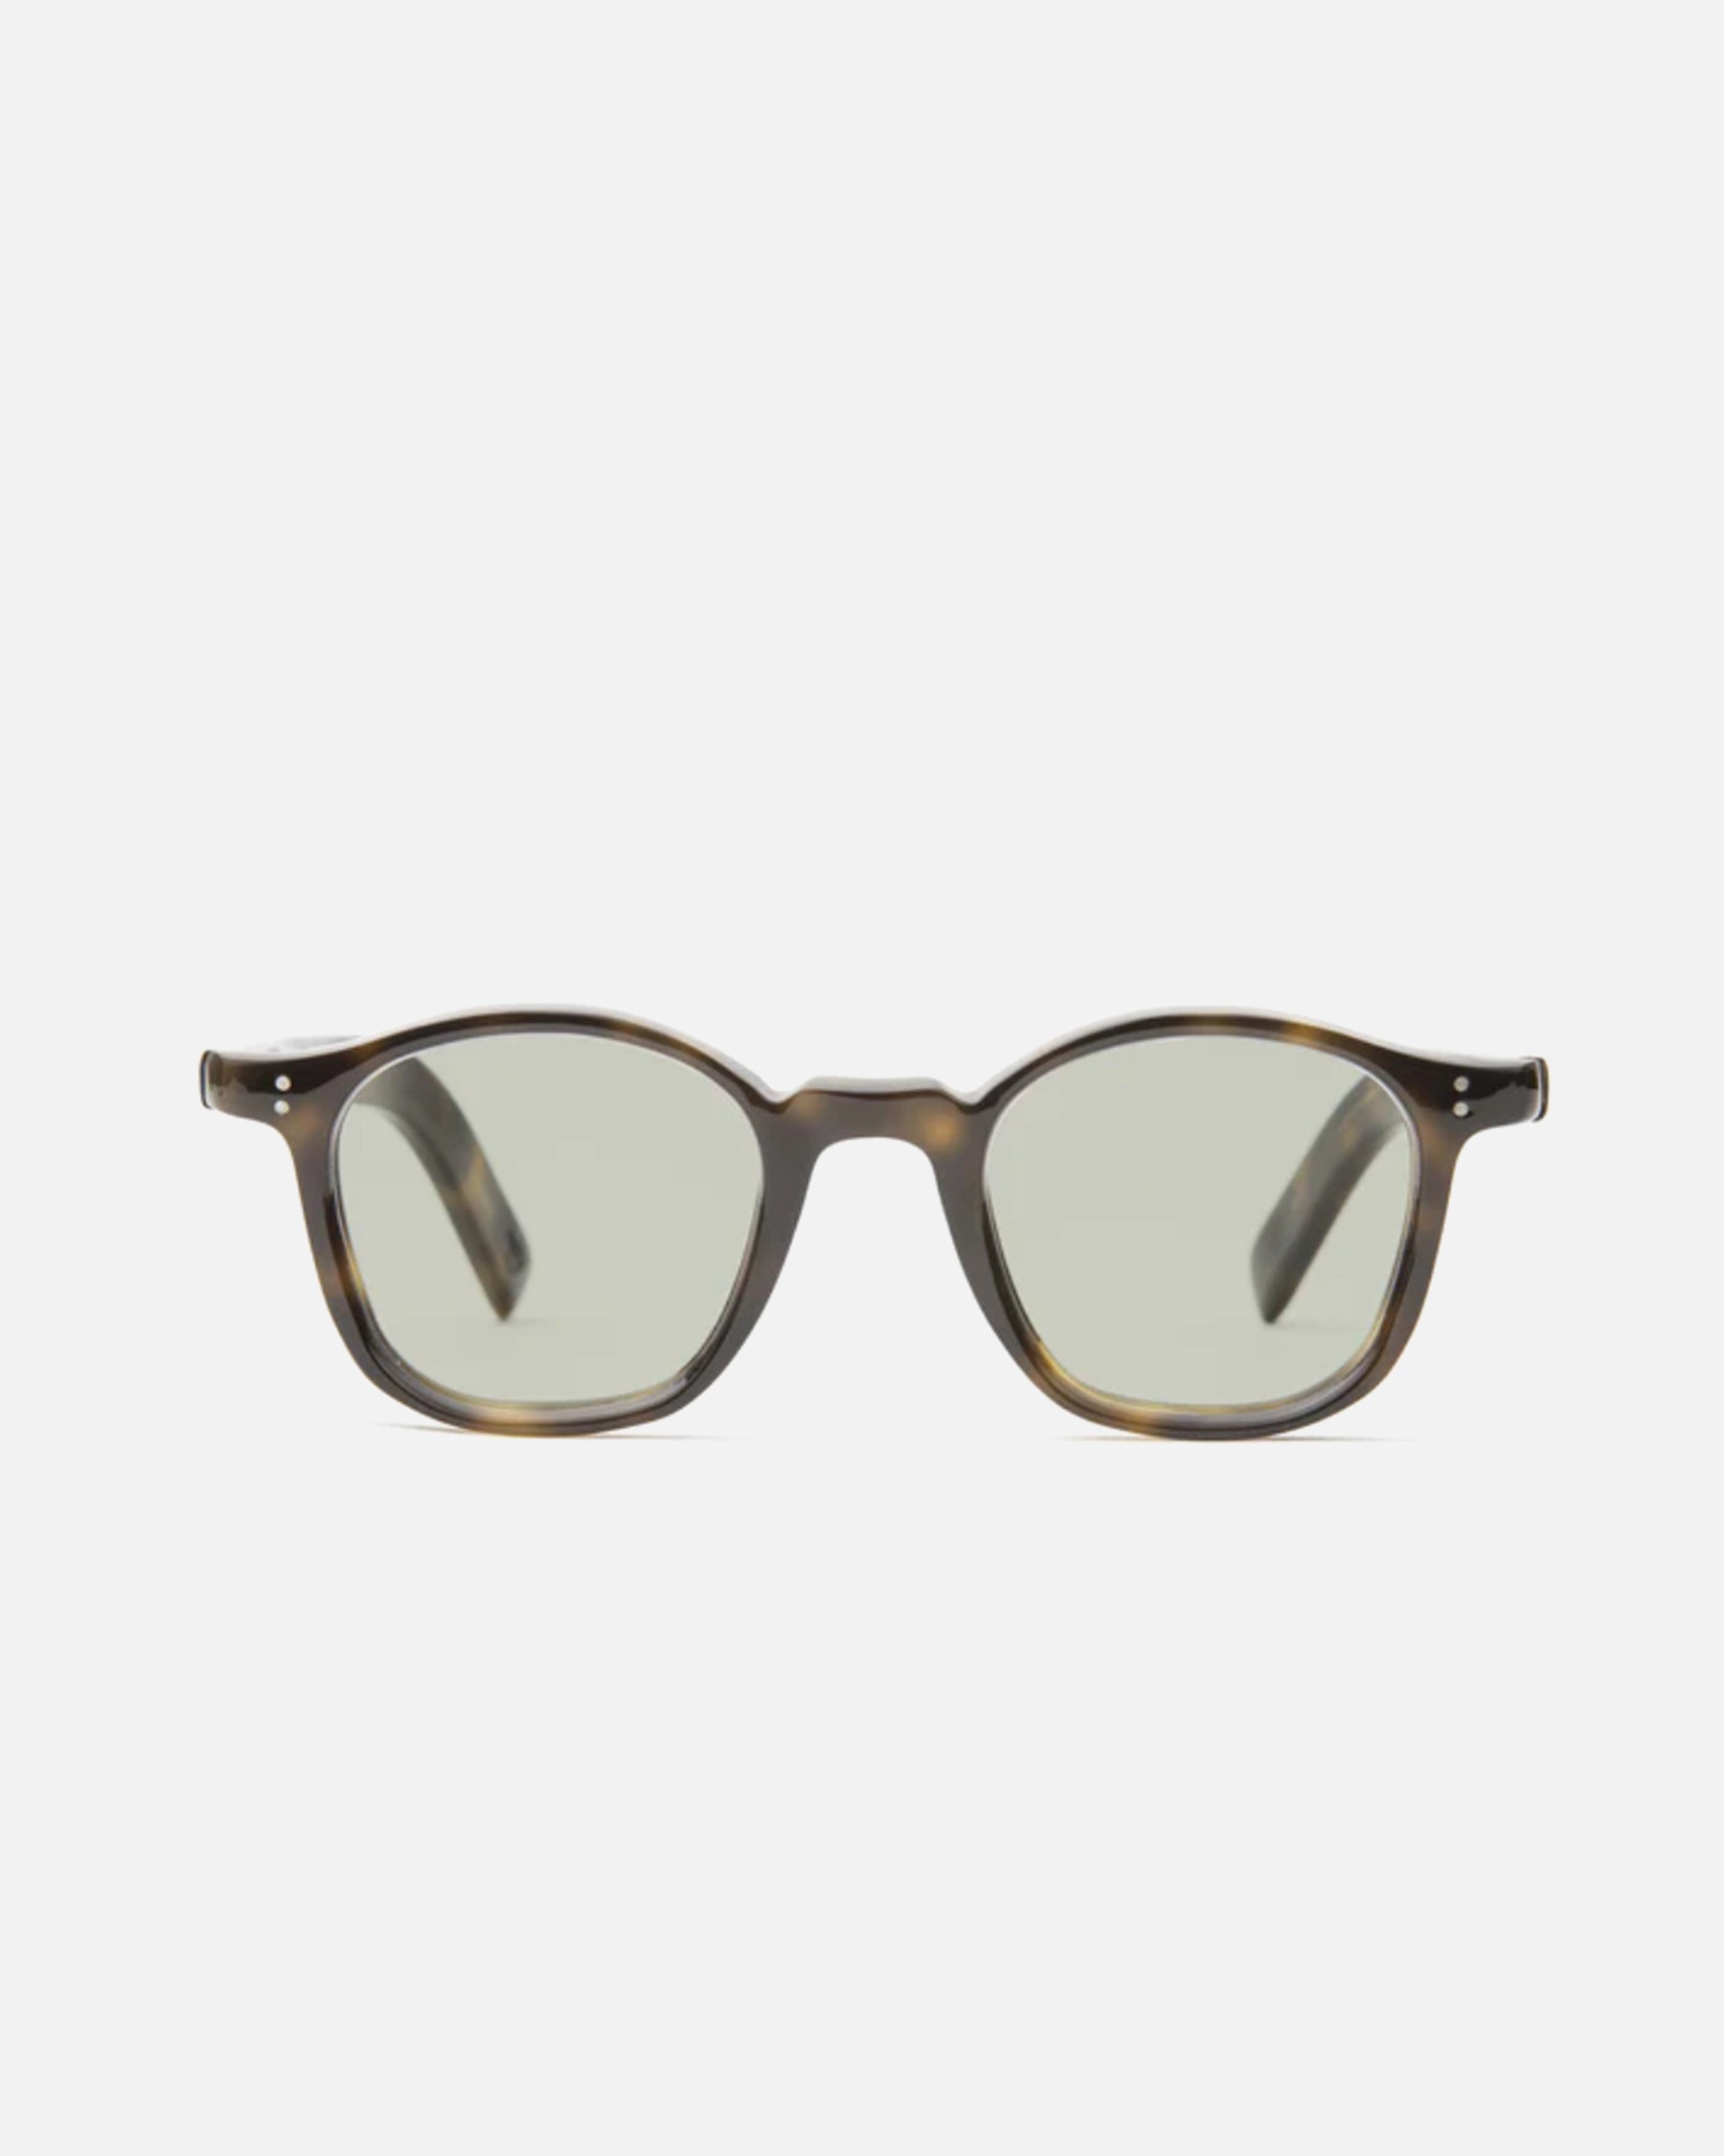 gp-01 Sunglasses Ecaille / Lens:Green